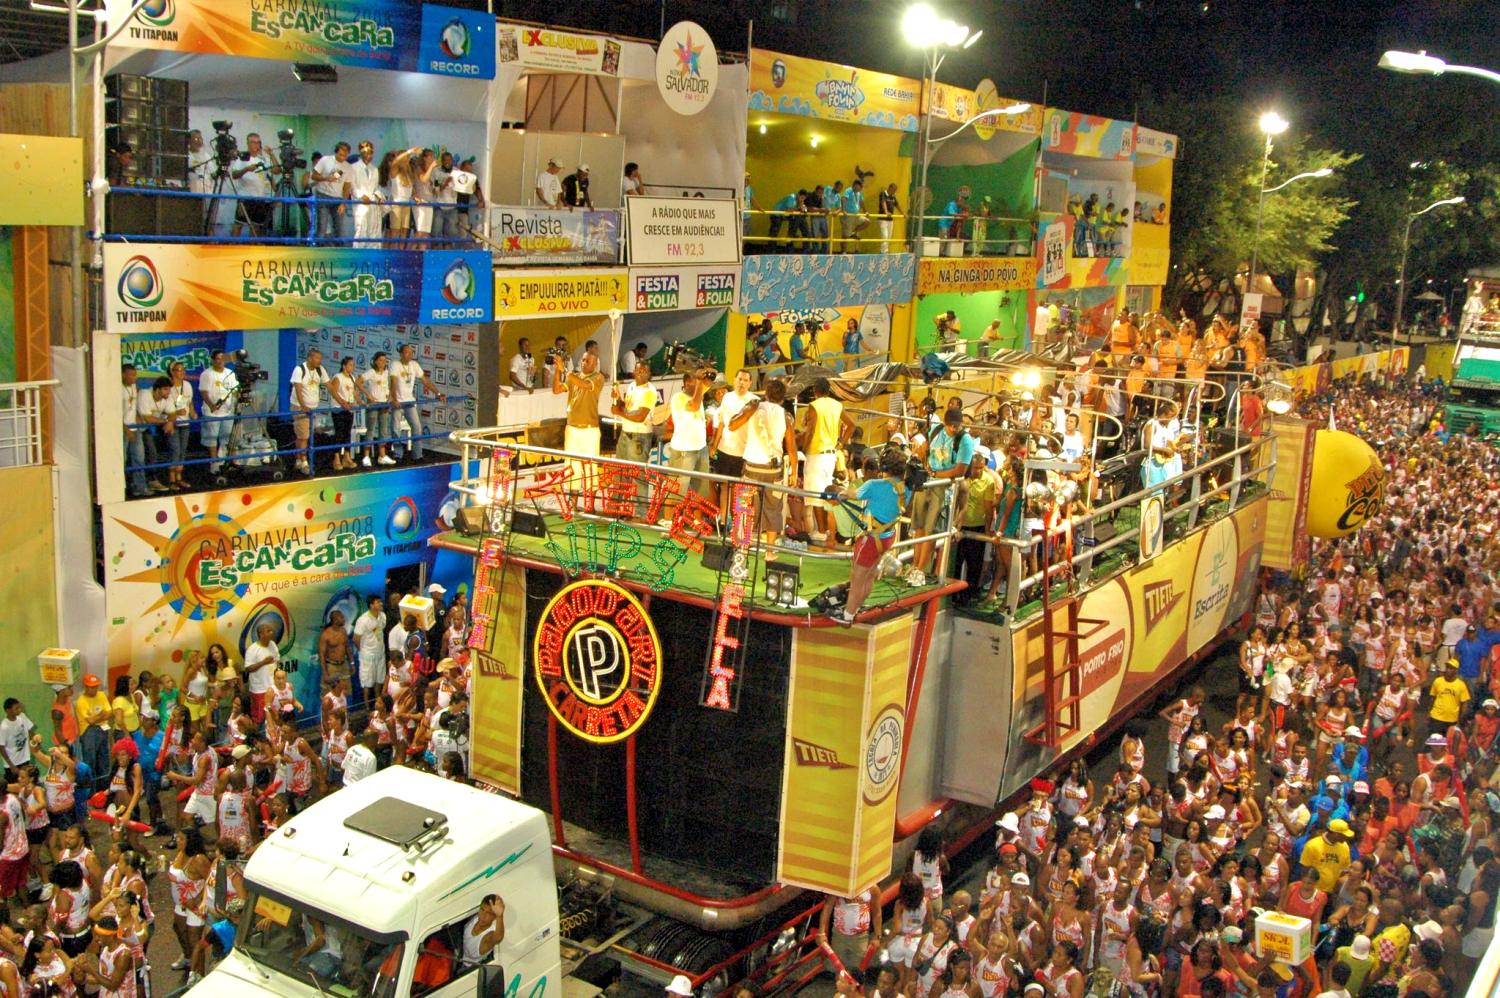 Carnaval de Salvador, Brazil